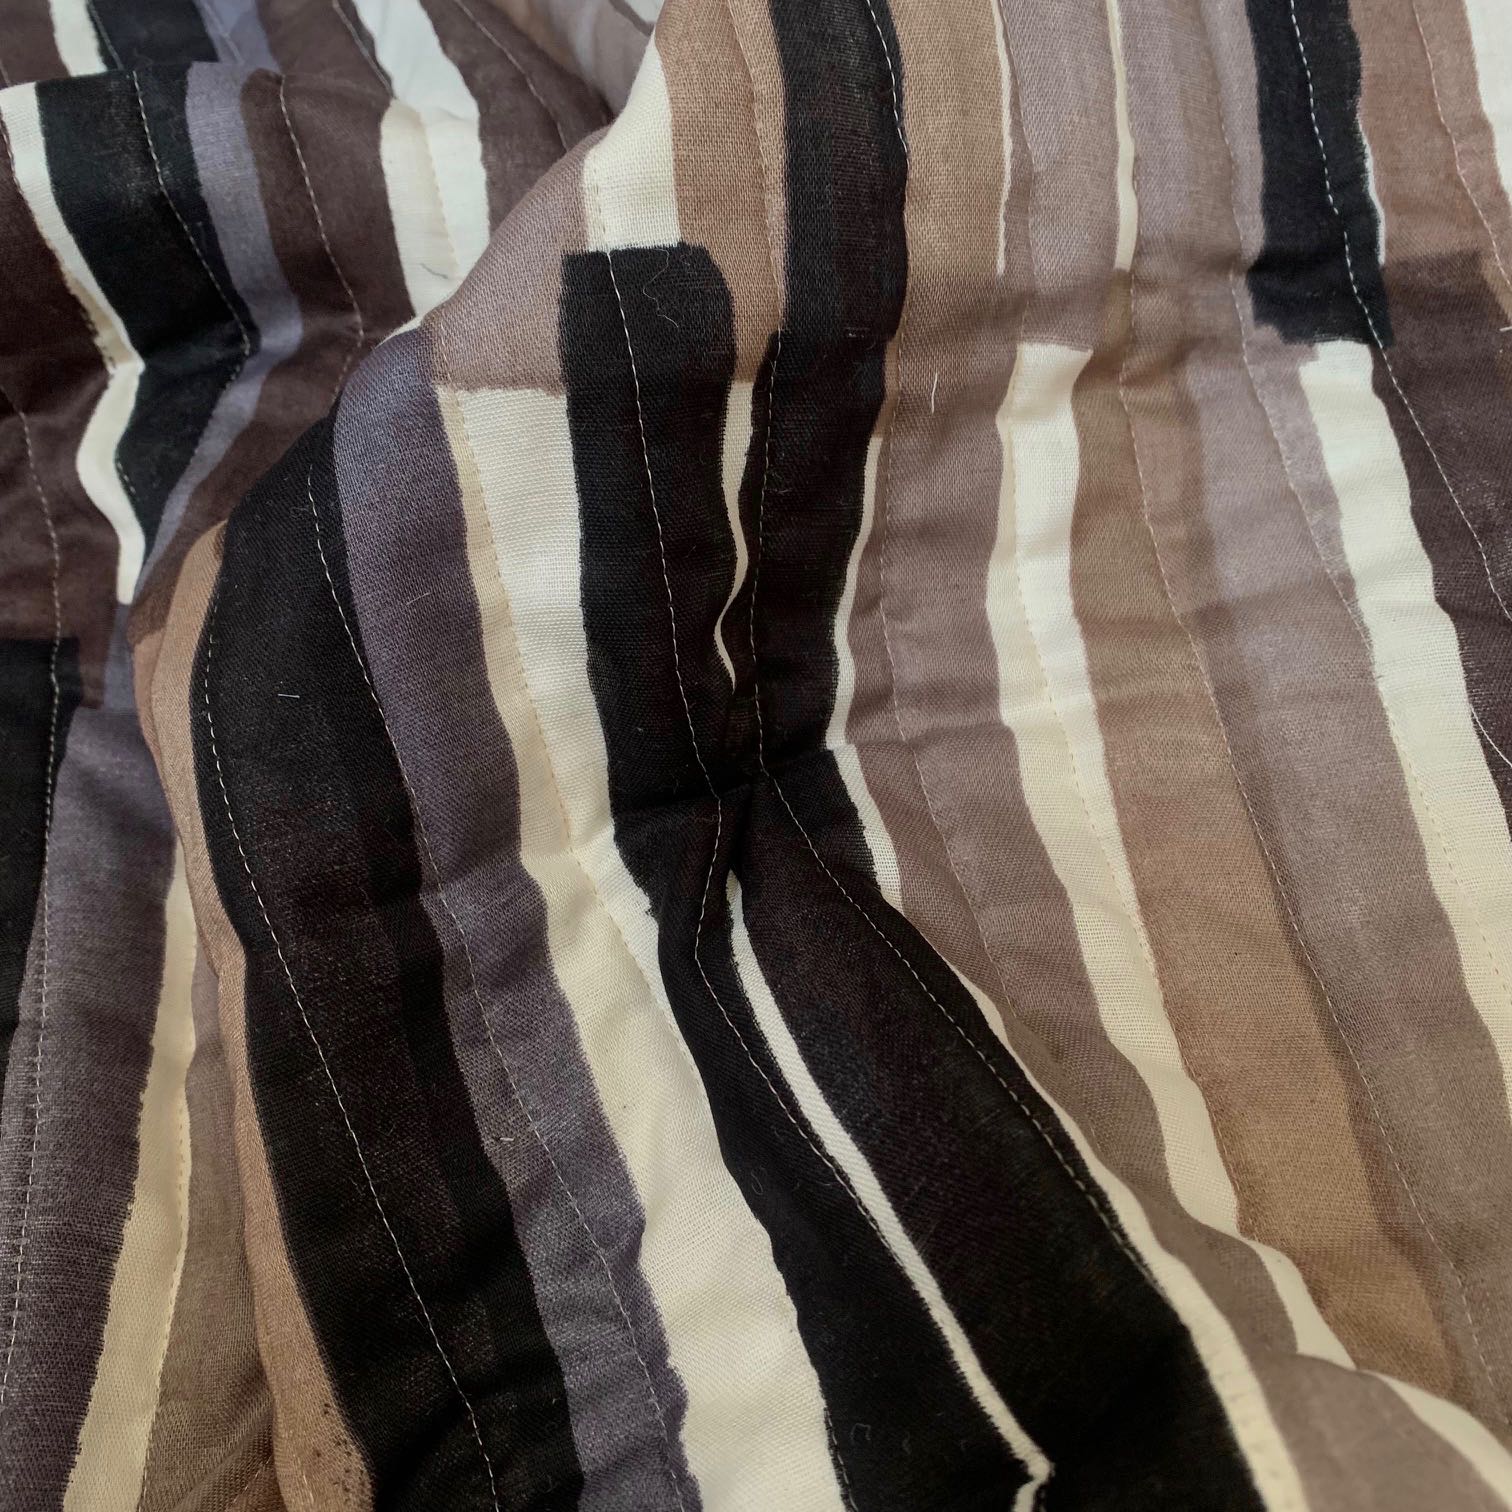 NANI IRO • Grace Quilted Organic Cotton Double Gauze Fabric • Brown & Grey • NEW